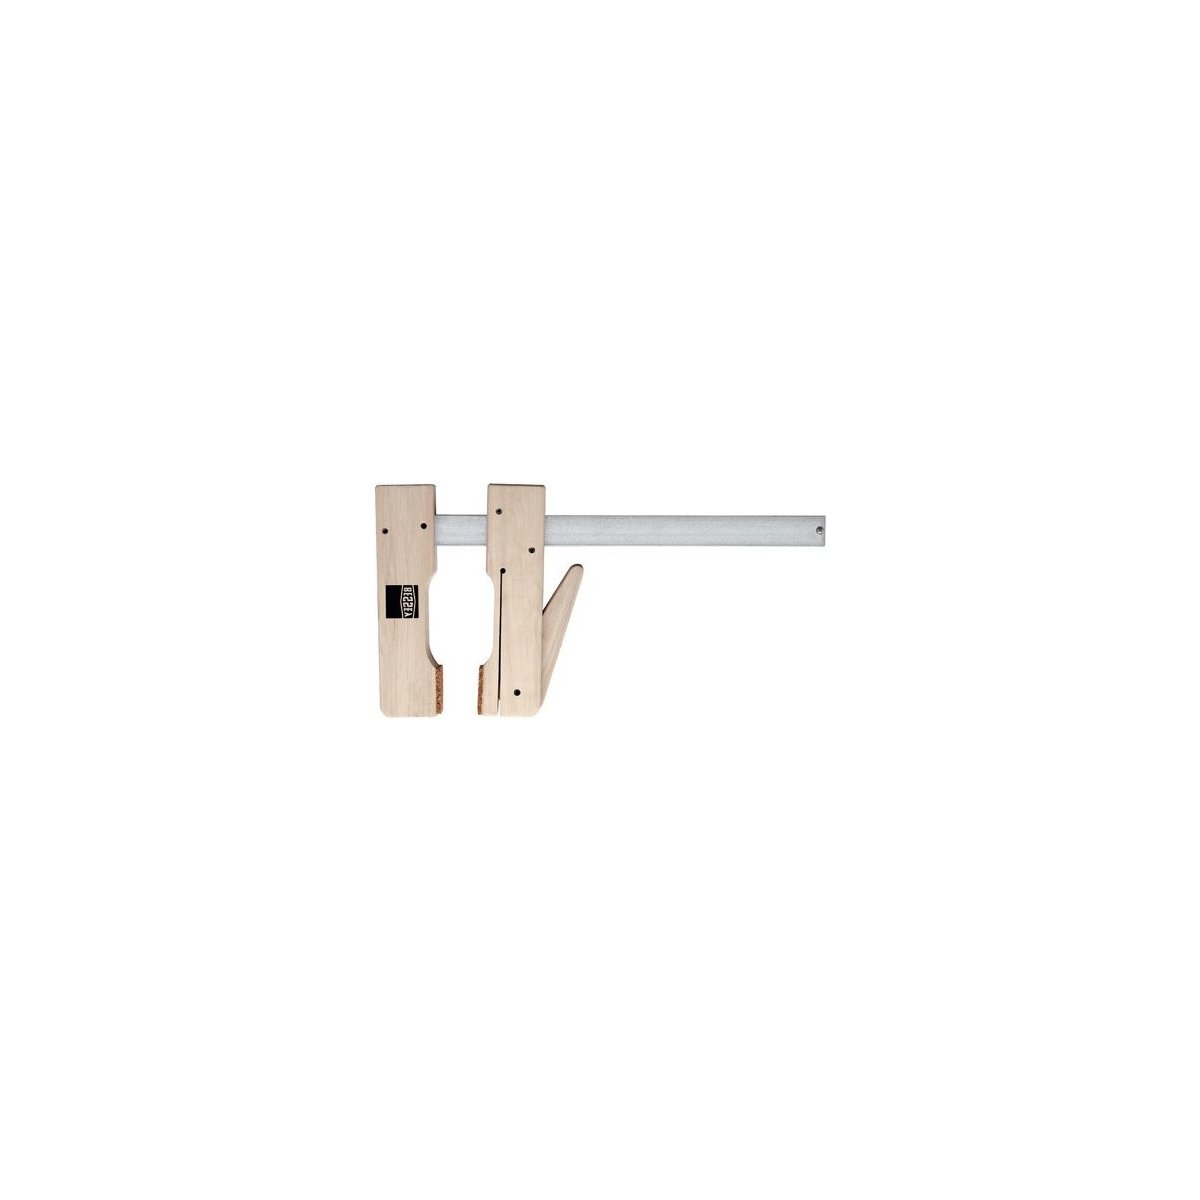 HKL20 Klemmy струбцина деревянная 200/110, пробковая крошка для щадящего зажима